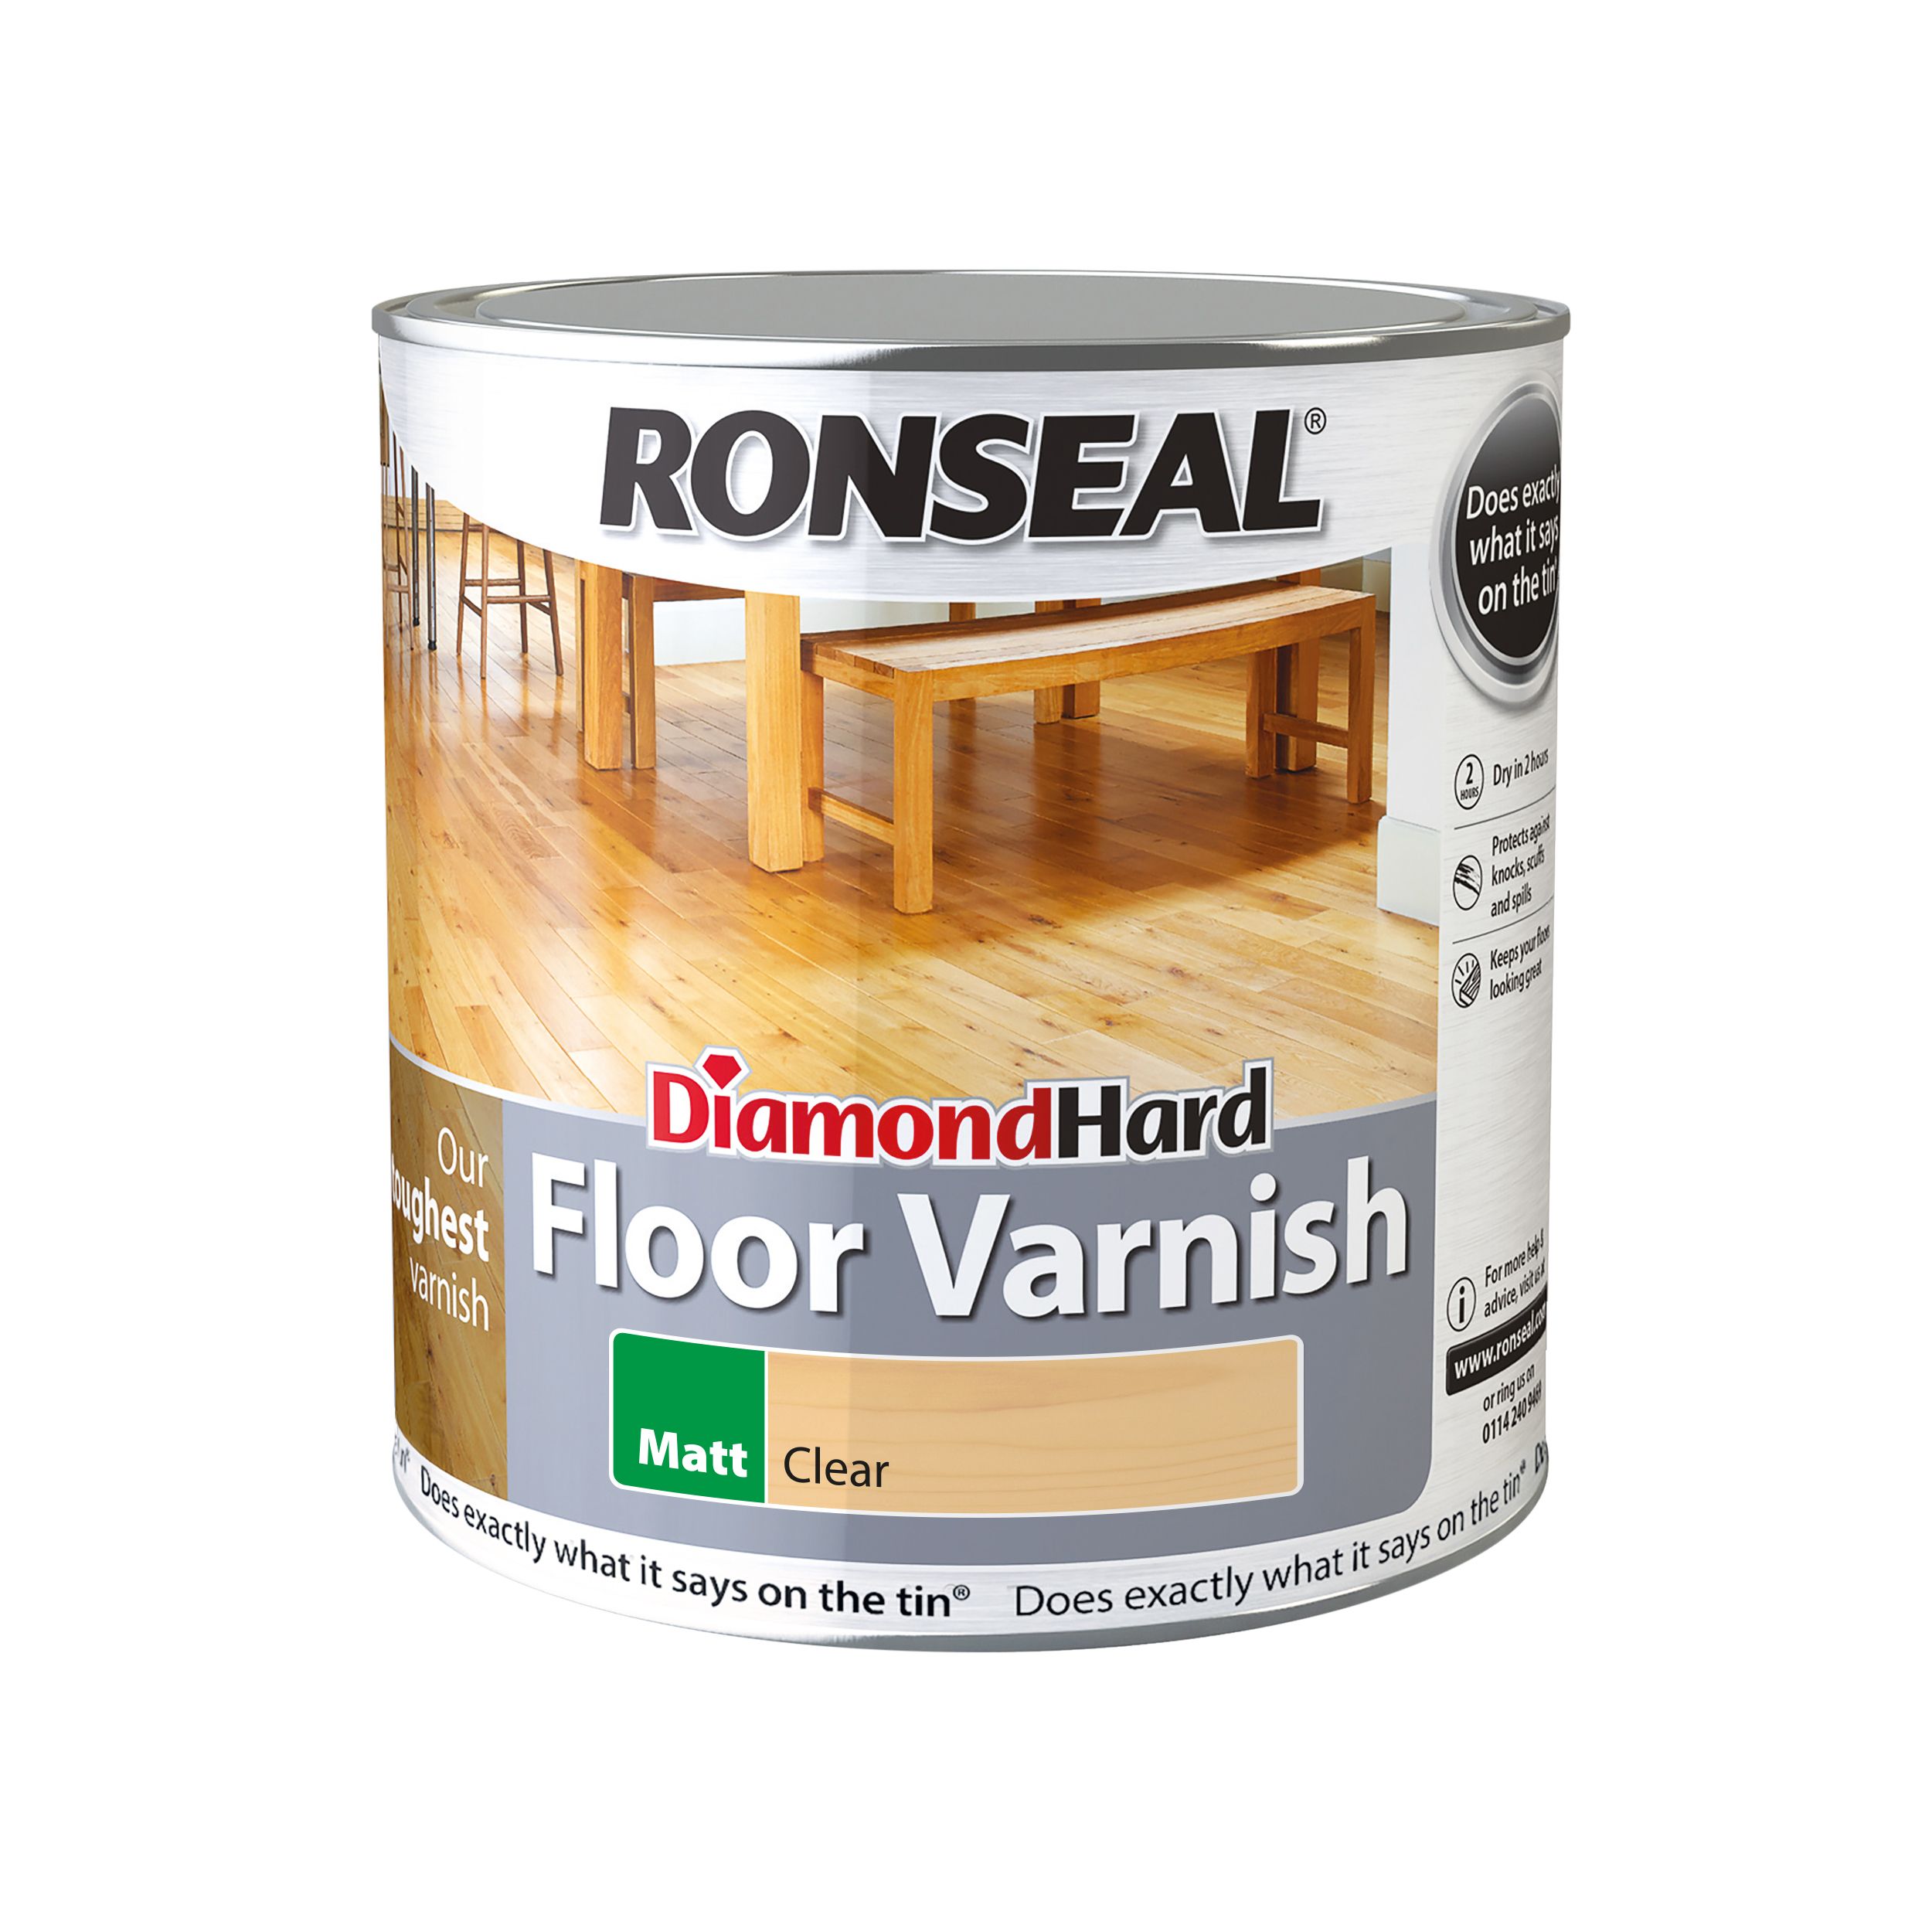 Ronseal Diamond Hard Floor Varnish Clear Matt Wood Floor Varnish, 2.5L